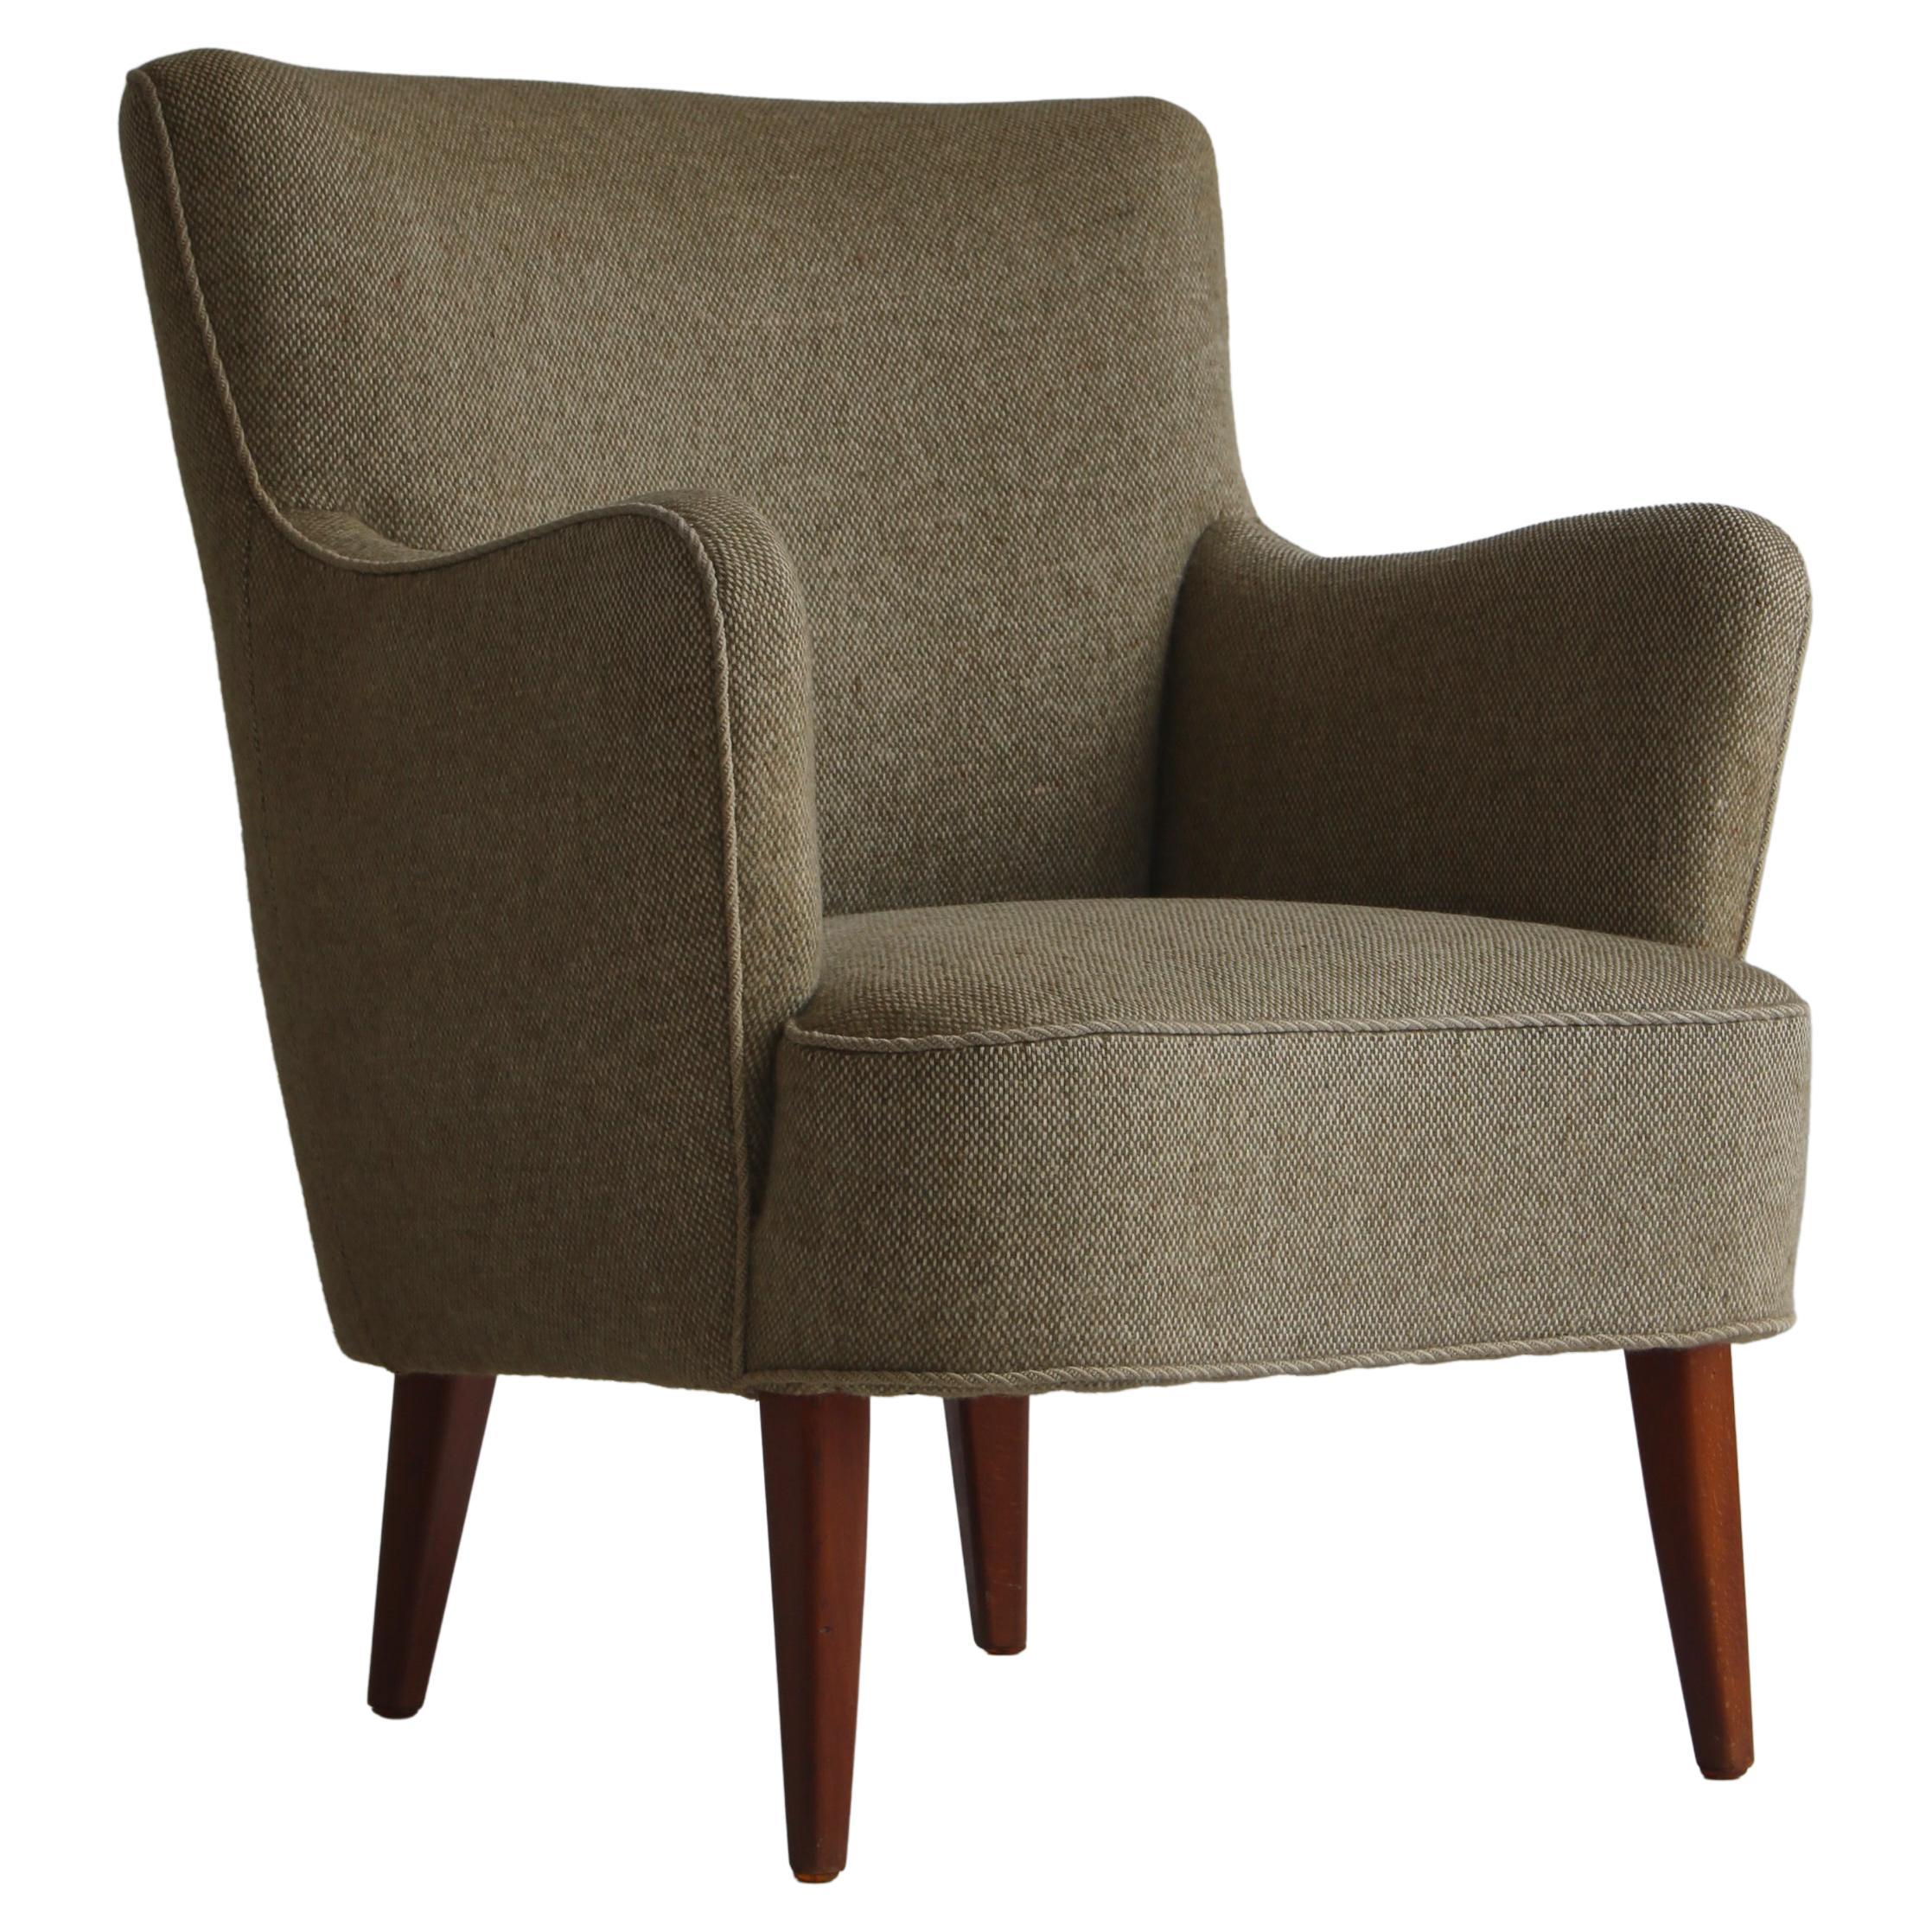 Danish Modern Easy Chair in Beech & Wool Upholstery by Hvidt & Mølgaard, 1950s